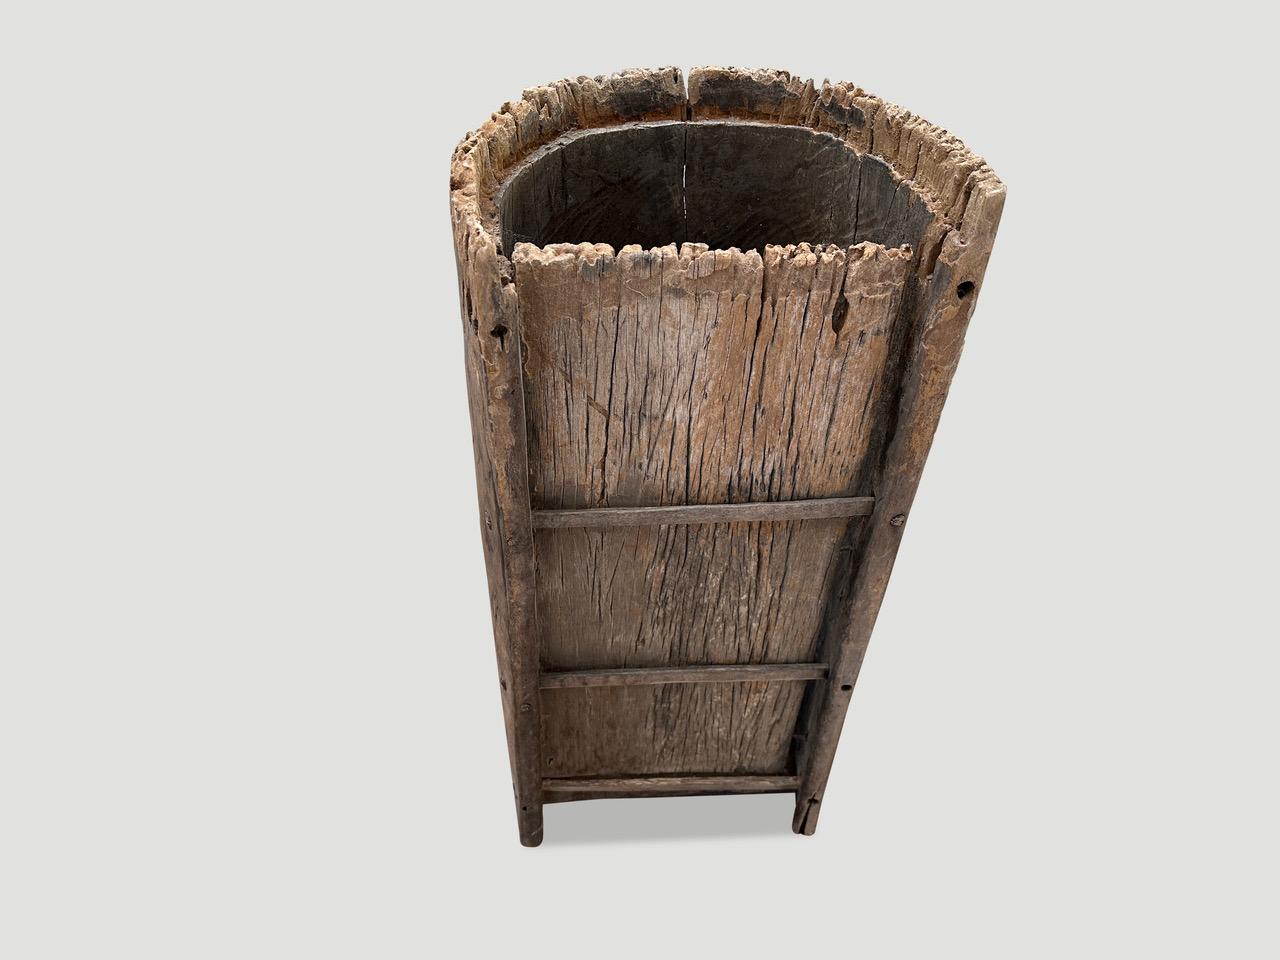 Wood Andrianna Shamaris Wabi Sabi Antique Container For Sale